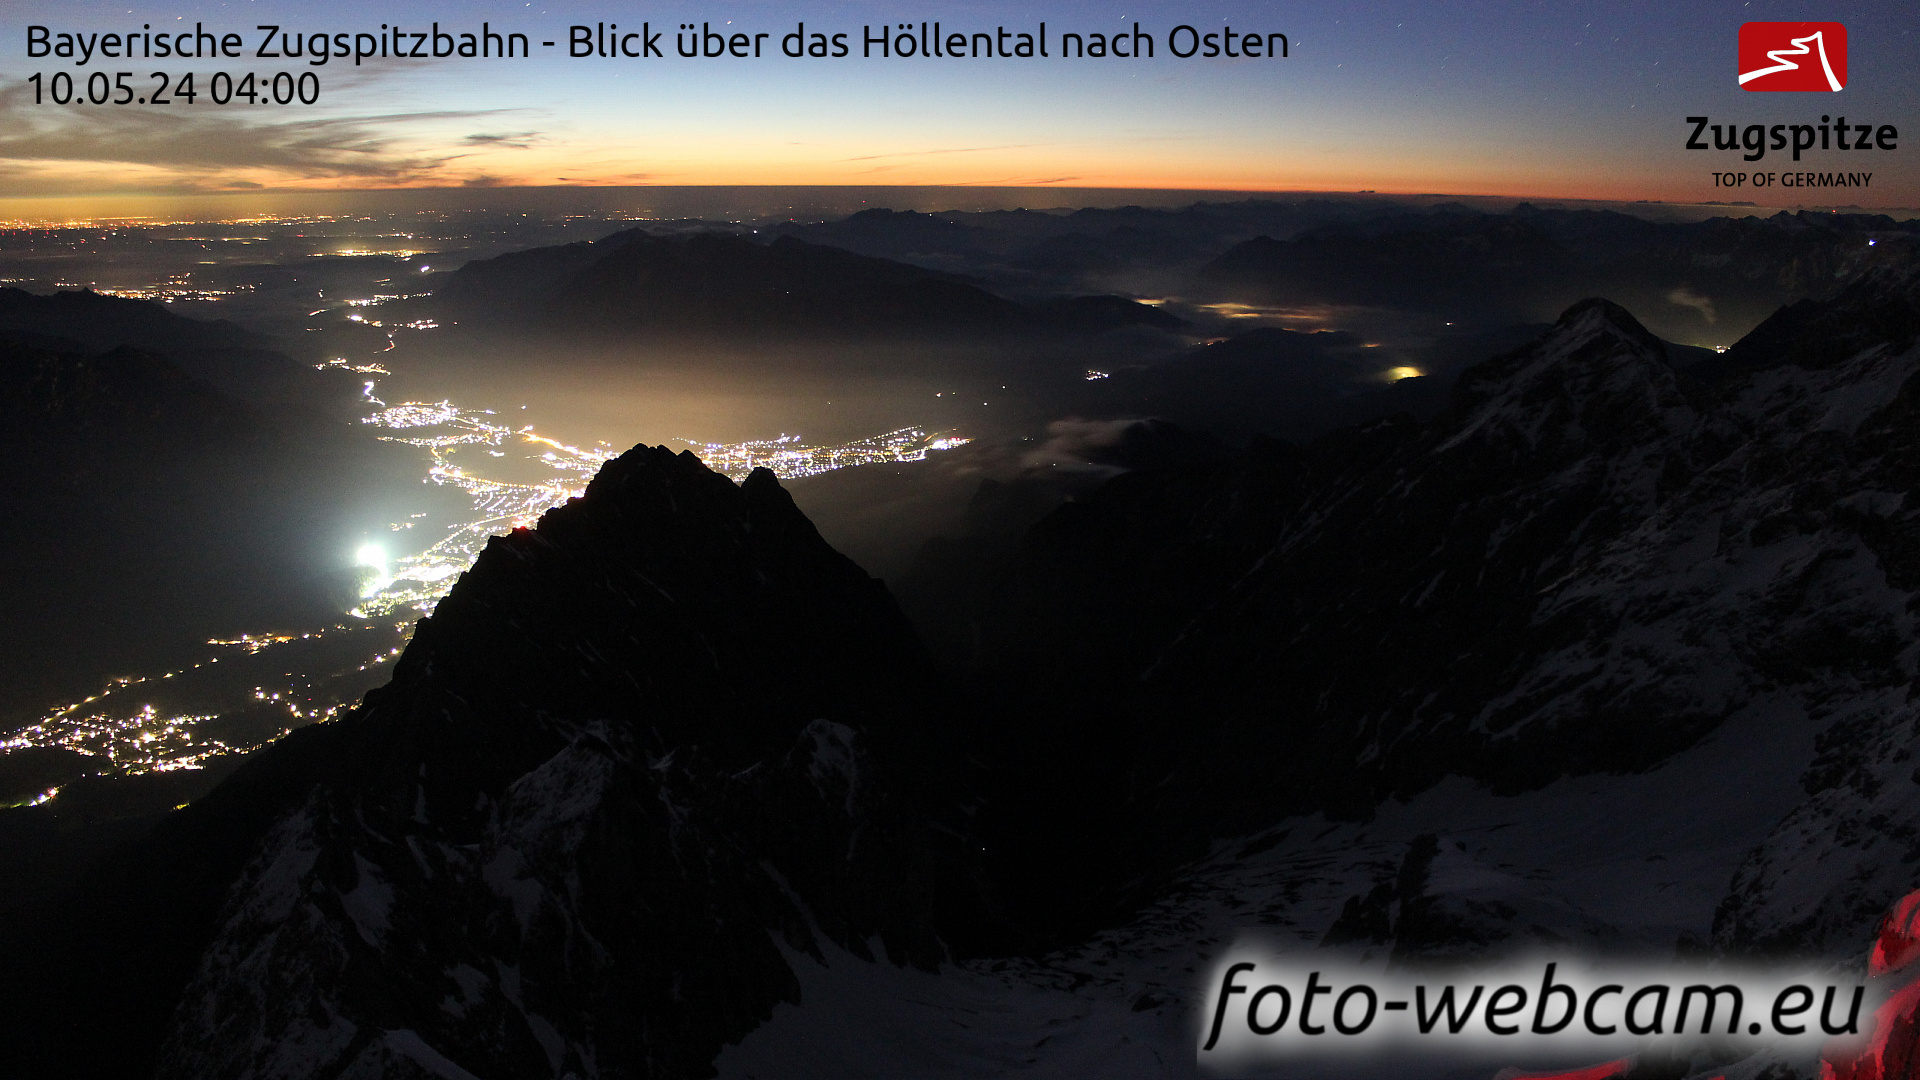 Zugspitze Dom. 04:05